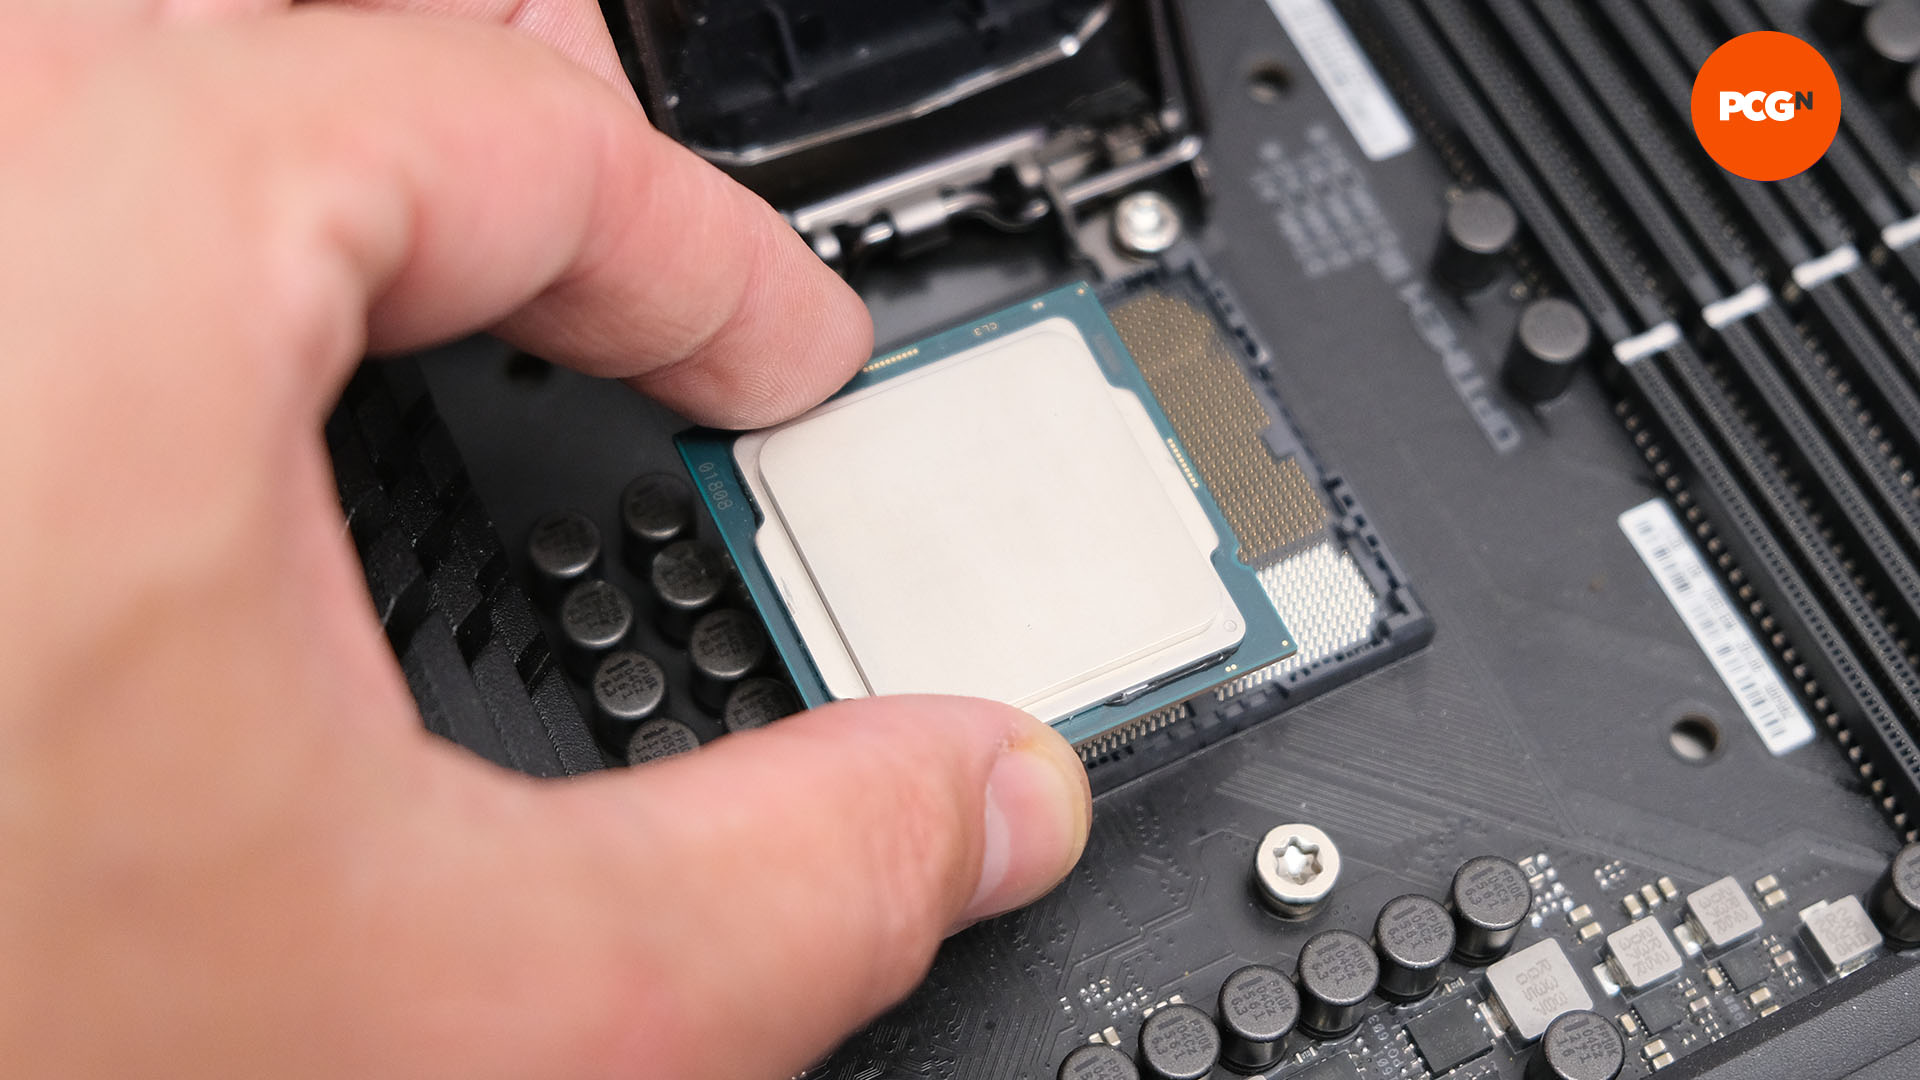 How to fix bent CPU pins: Install CPU carefully